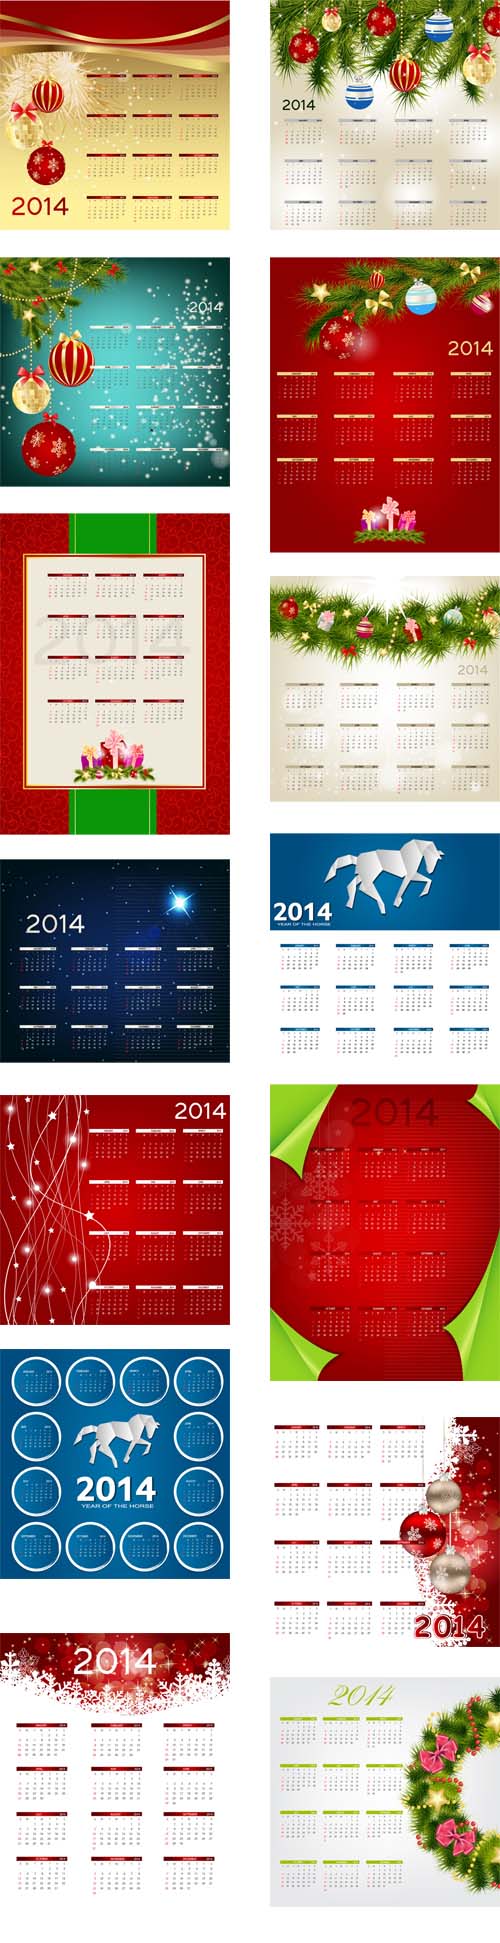 2014 calendar design 0538